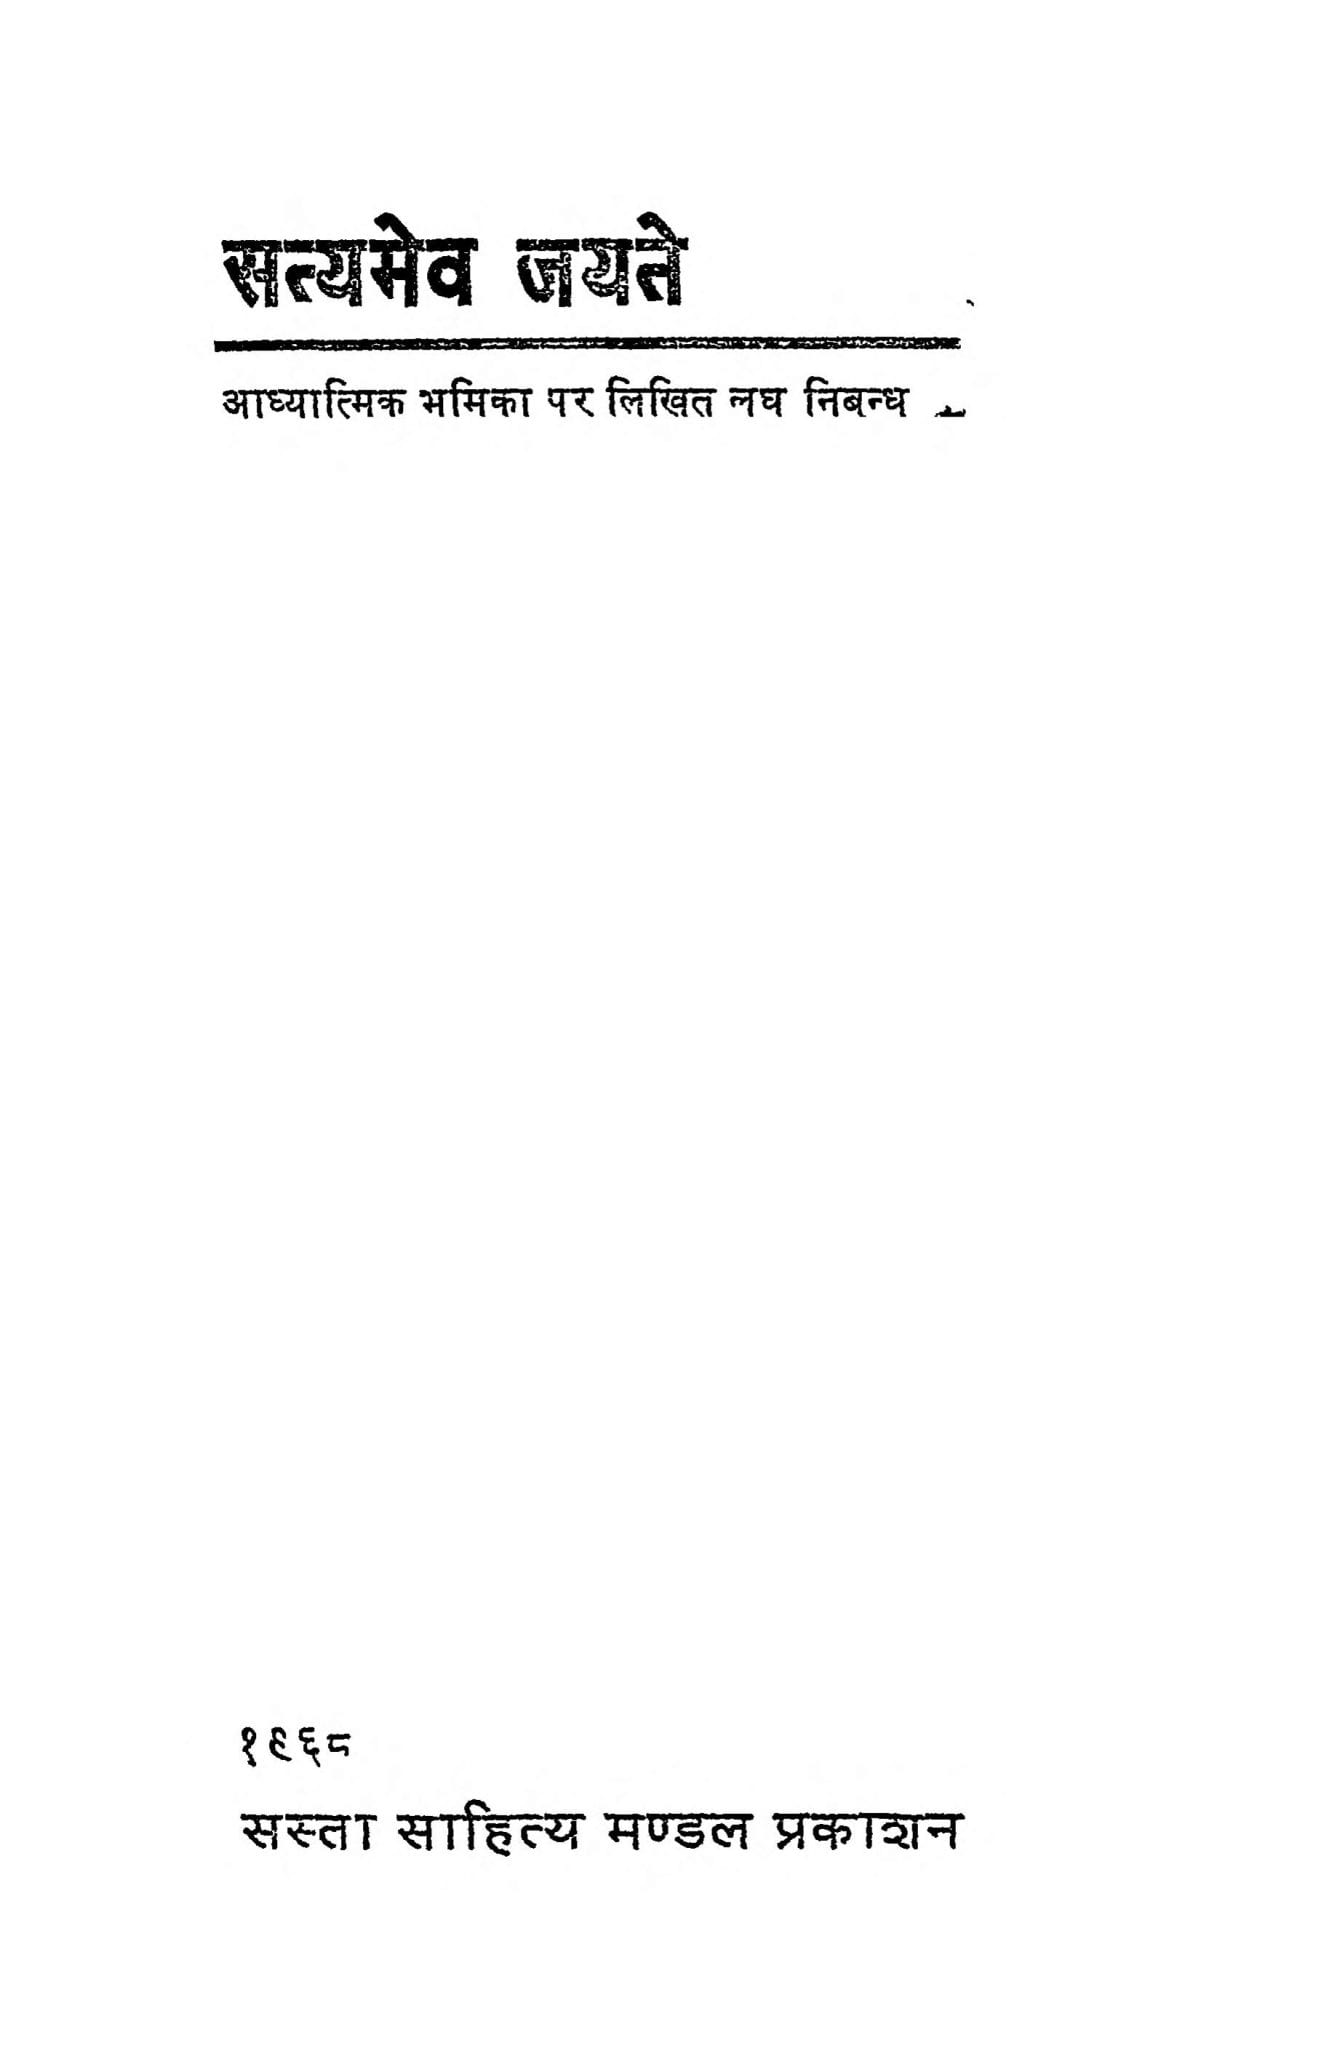 hindi essay of satyamev jayate